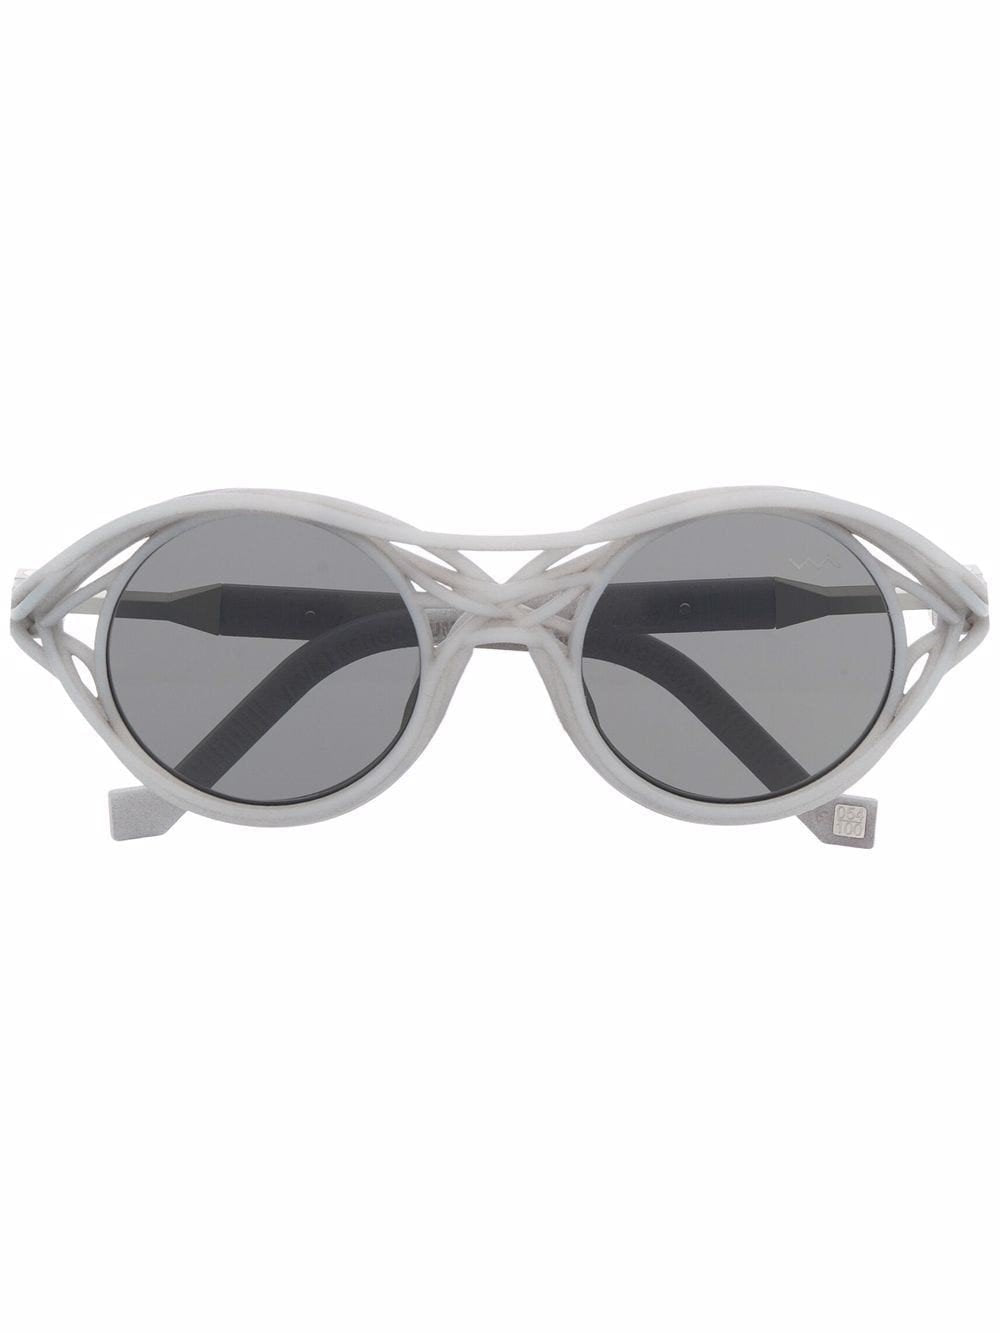 VAVA KENGO KUMA CL0015 Acetate / Aluminum Sunglasses - André Opticas